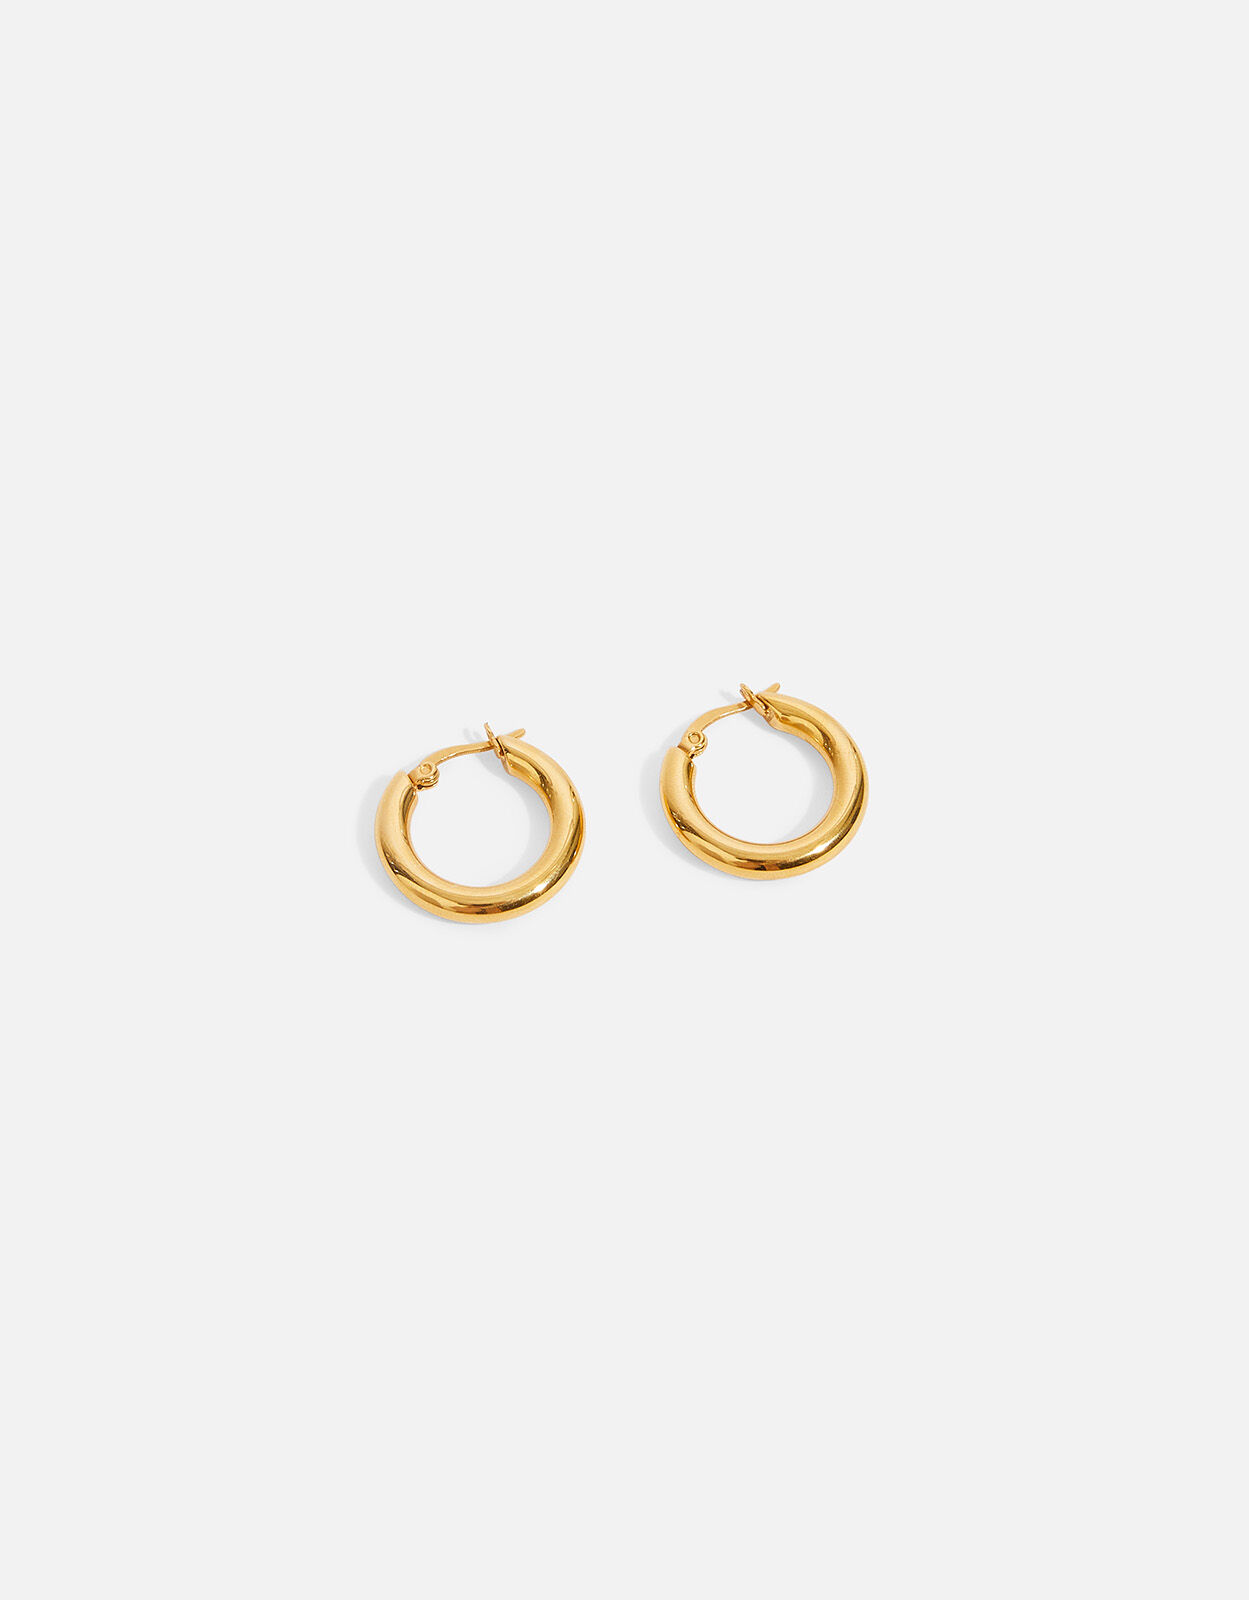 Flipkart.com - Buy Alphabettm Kaju Bali shaped earrings Gold-Plated stainless  steel hoop earring Stainless Steel Hoop Earring Alloy Hoop Earring Online  at Best Prices in India